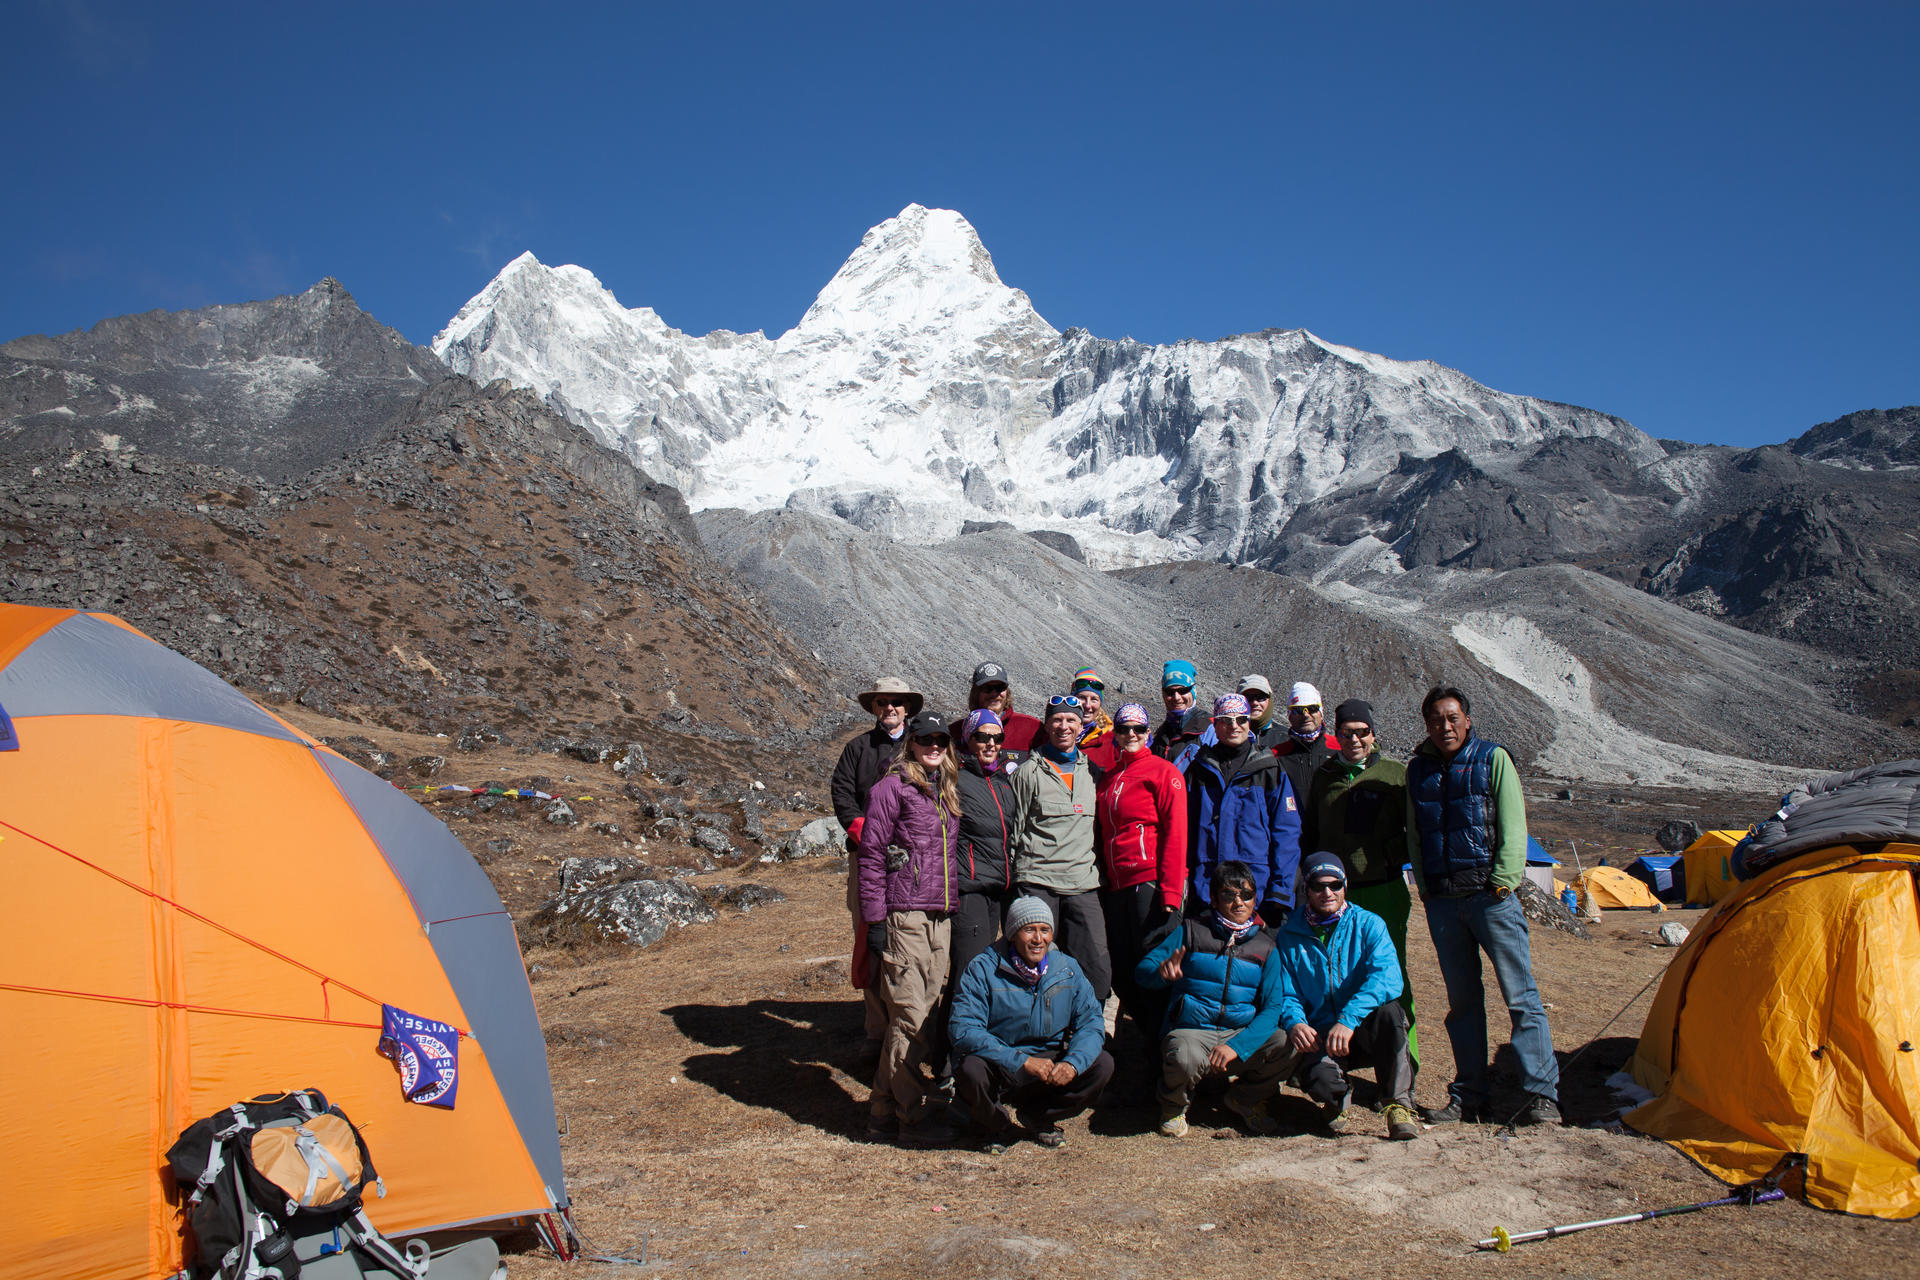 EverestBasecampIslandpeak-2012@MagnusHendis (11)